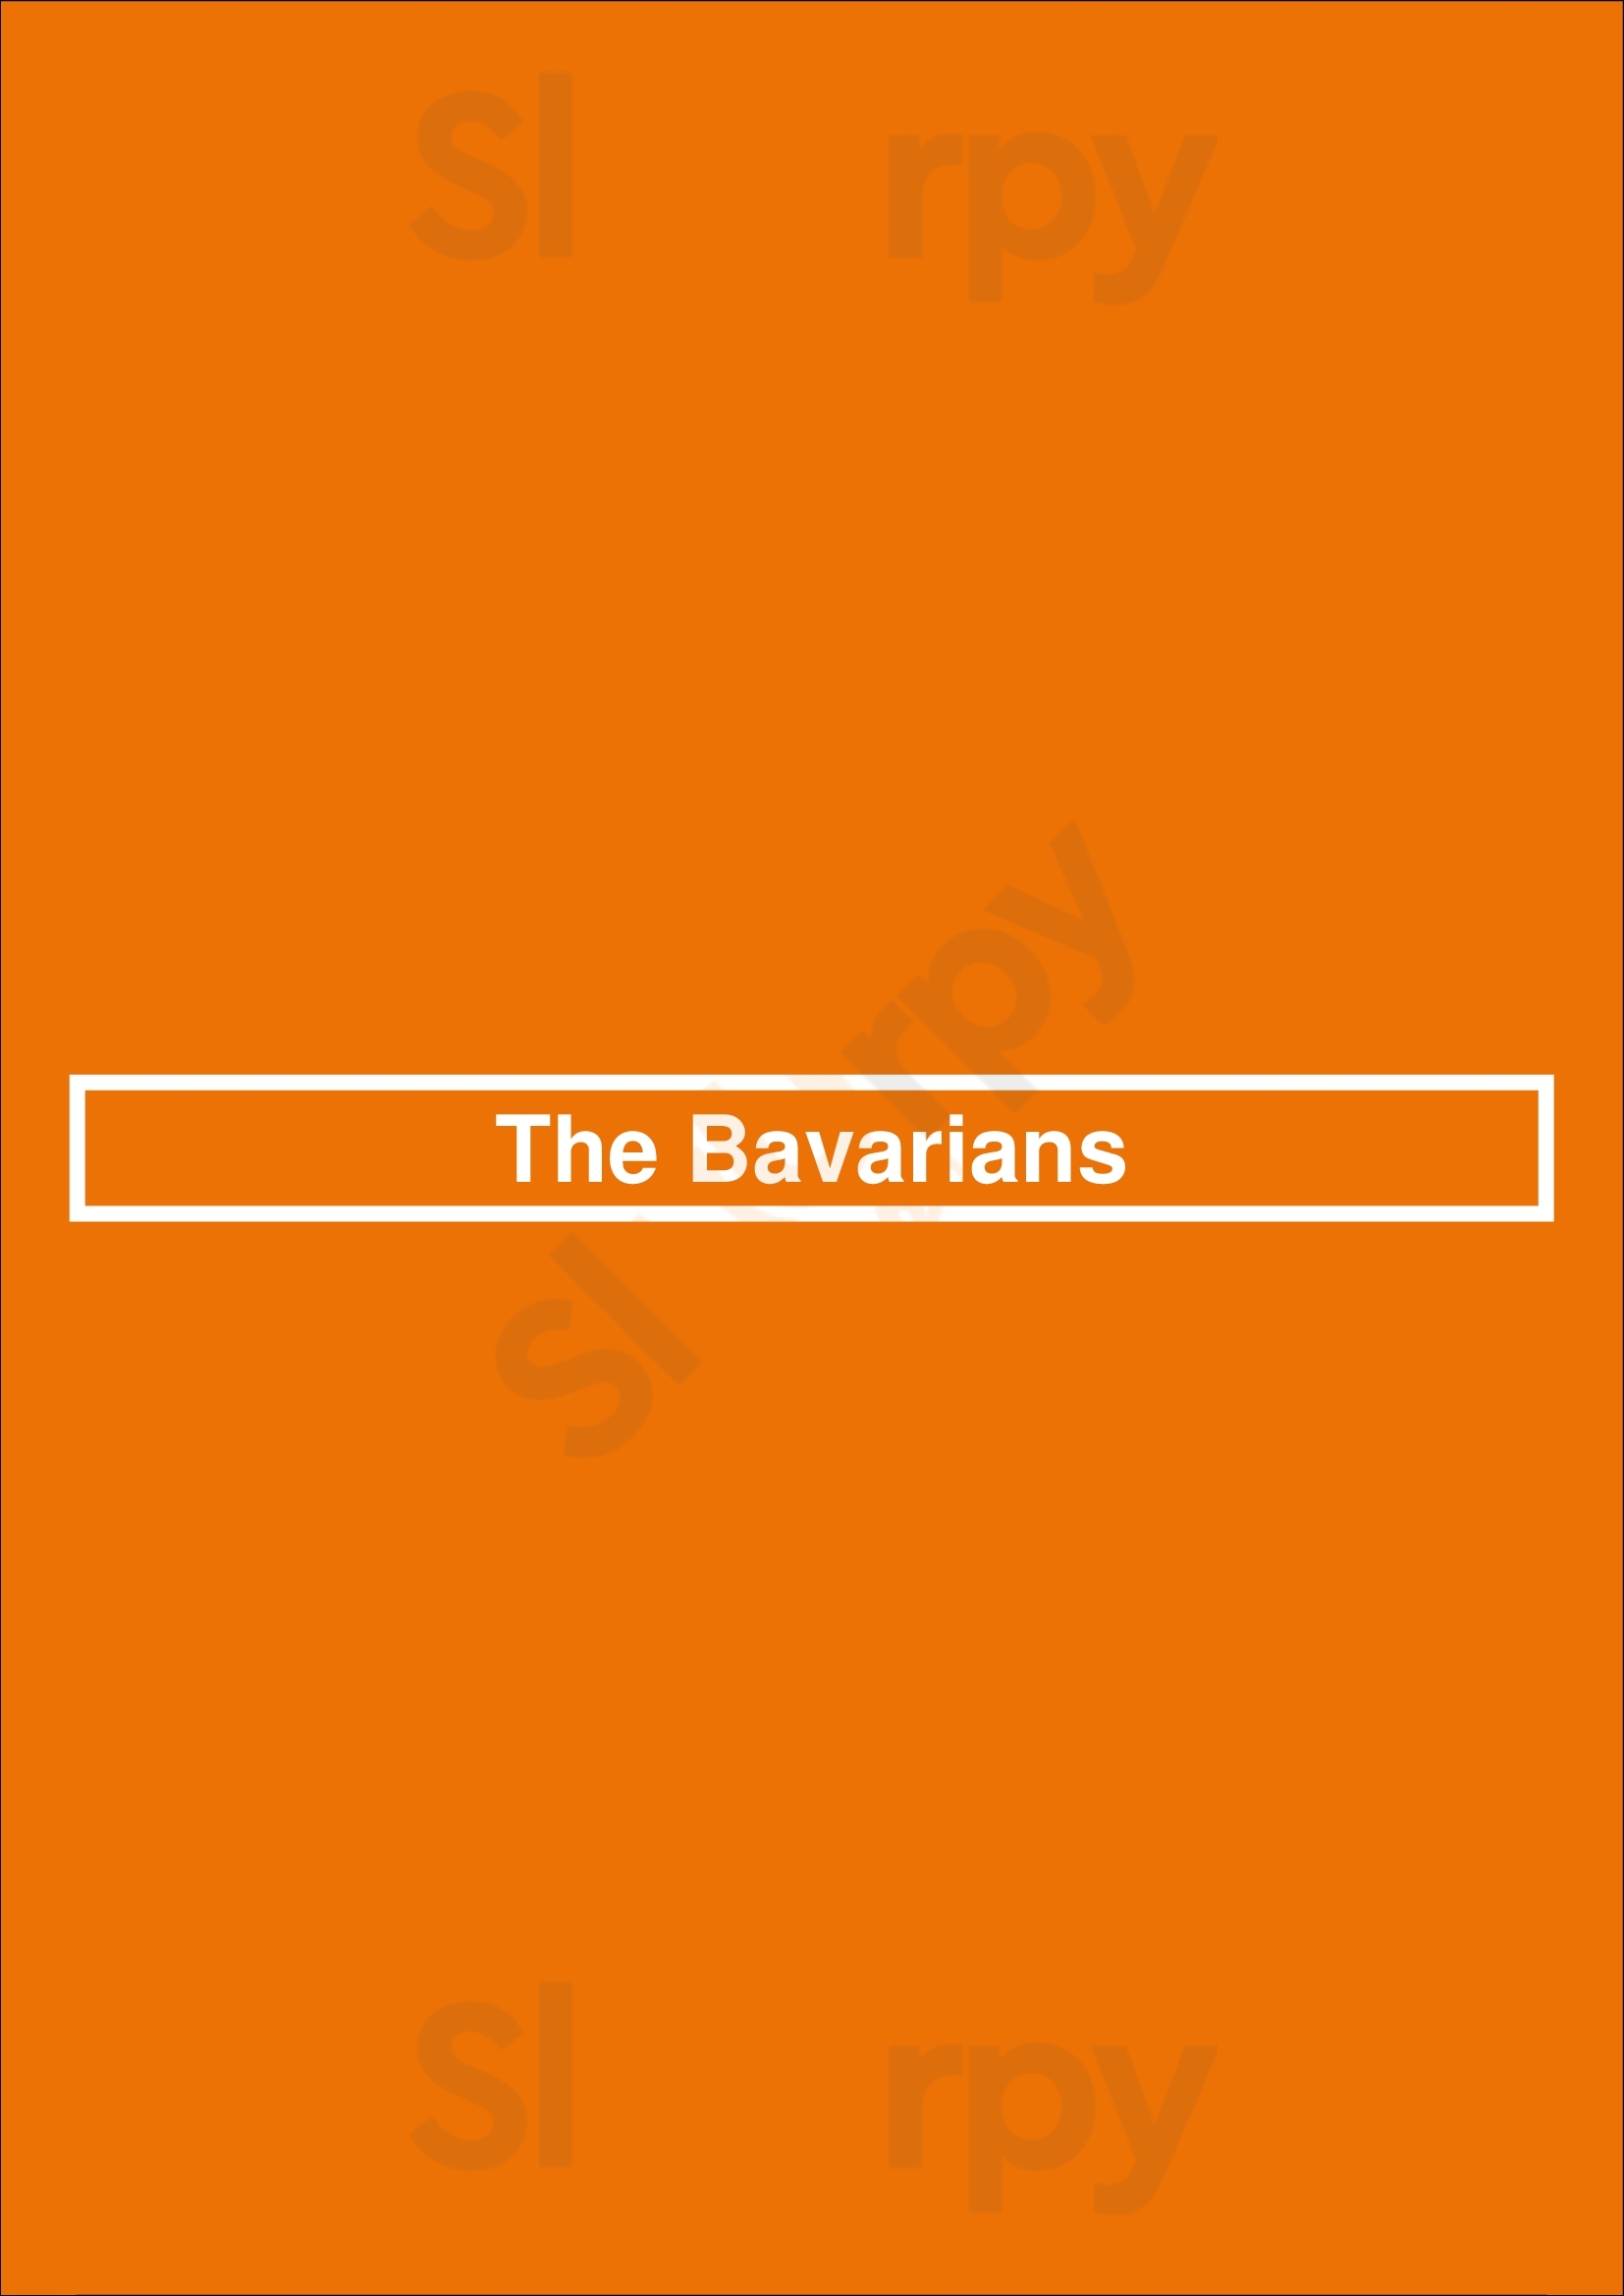 The Bavarians Maroochydore Menu - 1